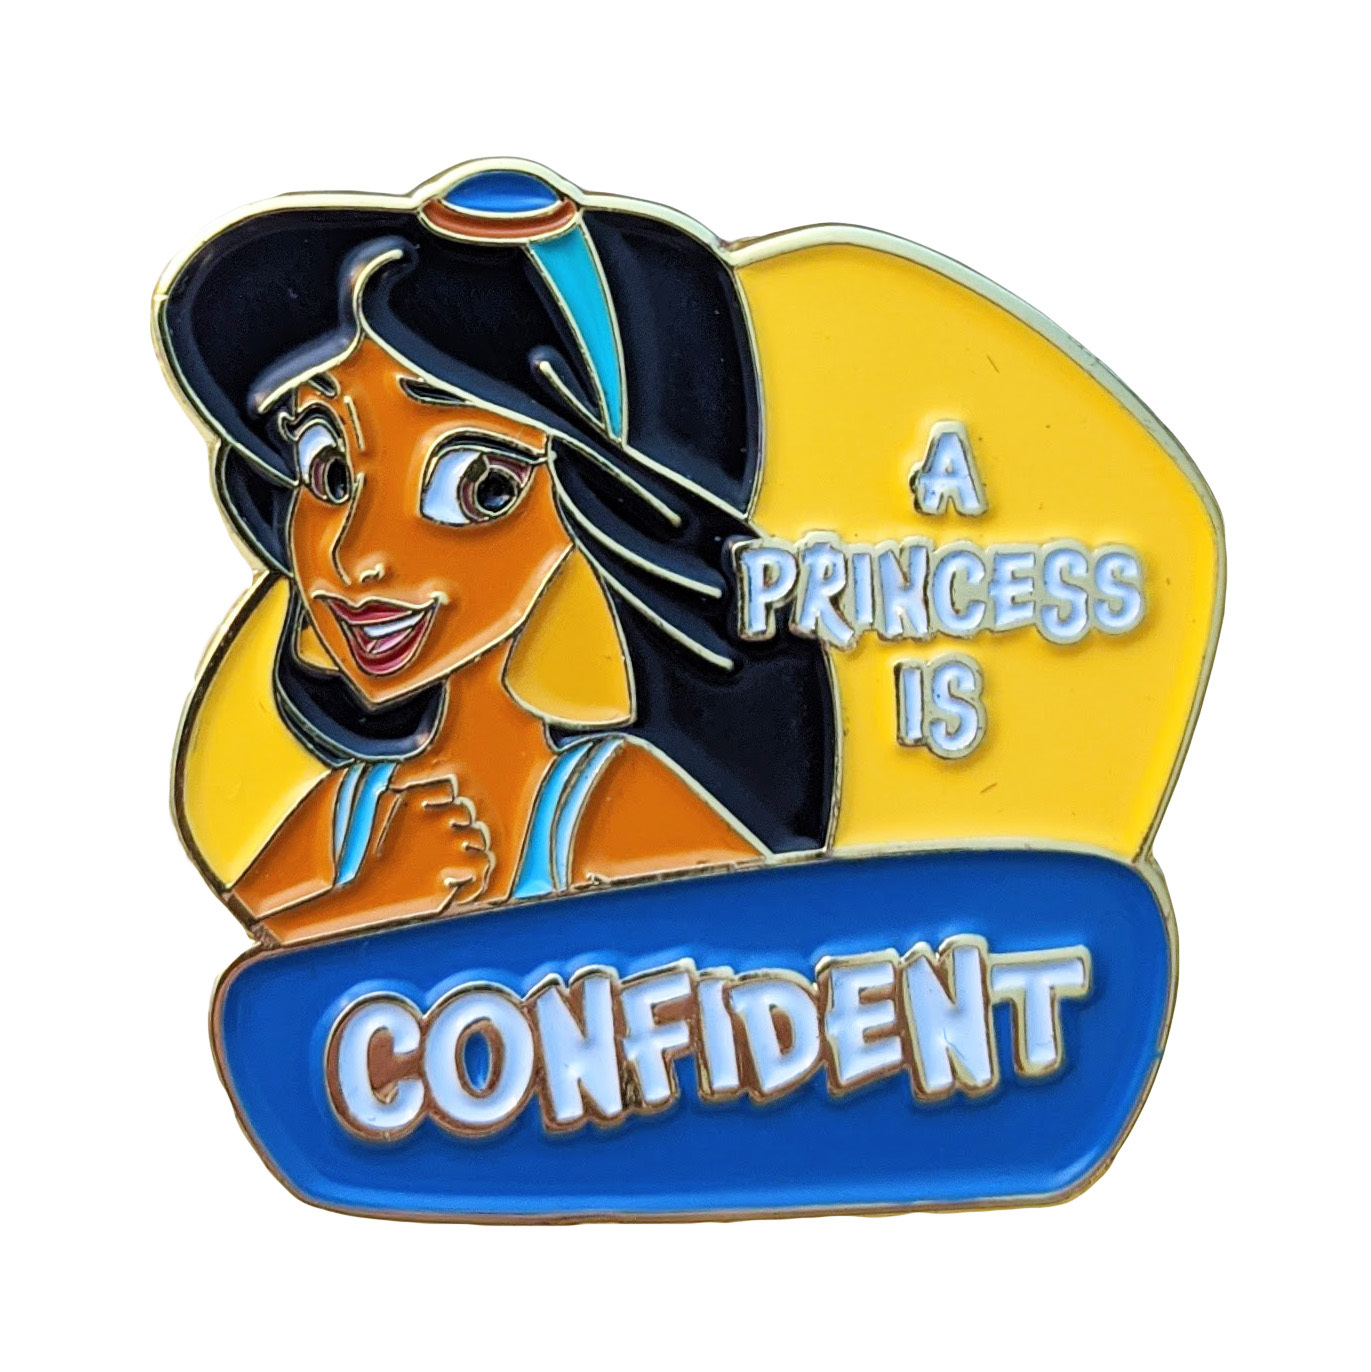 Wreck It Ralph Breaks the Internet Disney Pin: Jasmine, A Princess is Confident - $39.90